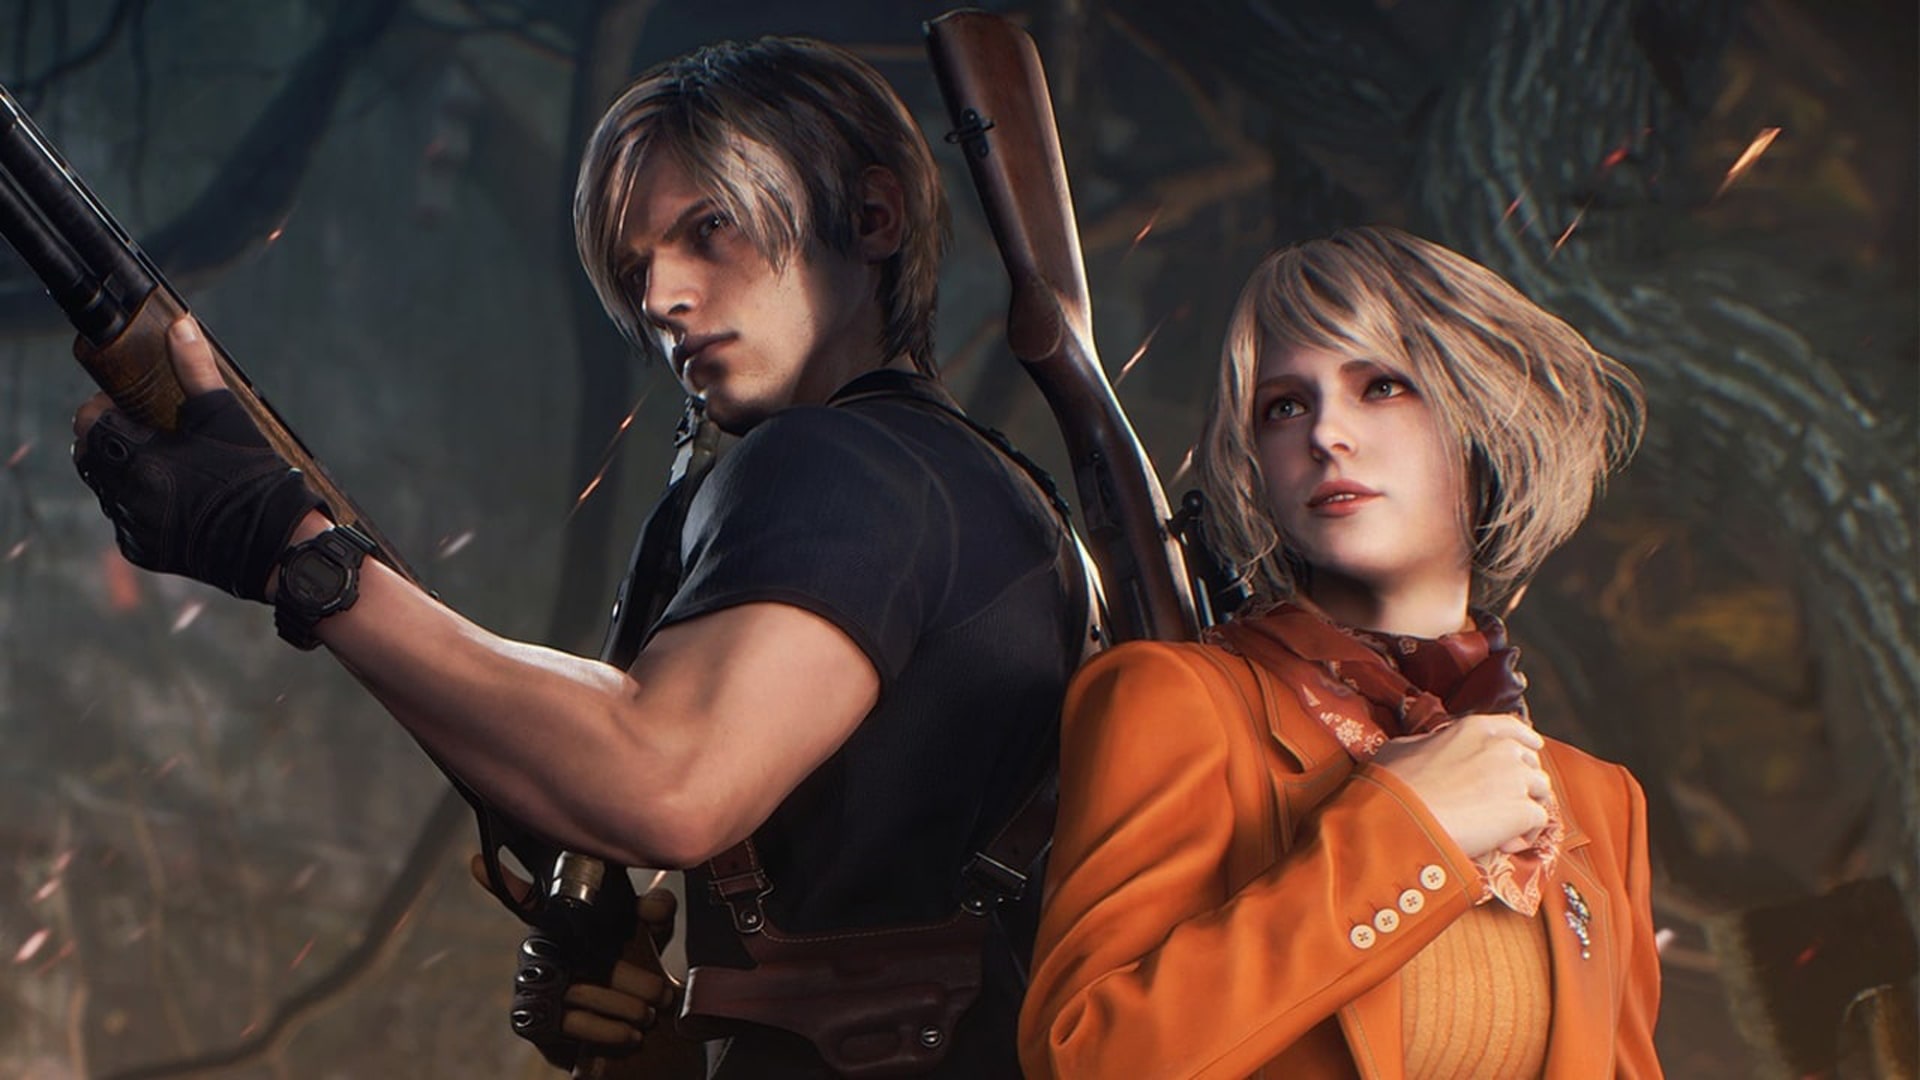 In-game screenshot of Resident Evil 4 Remake depicting intense survival horror action